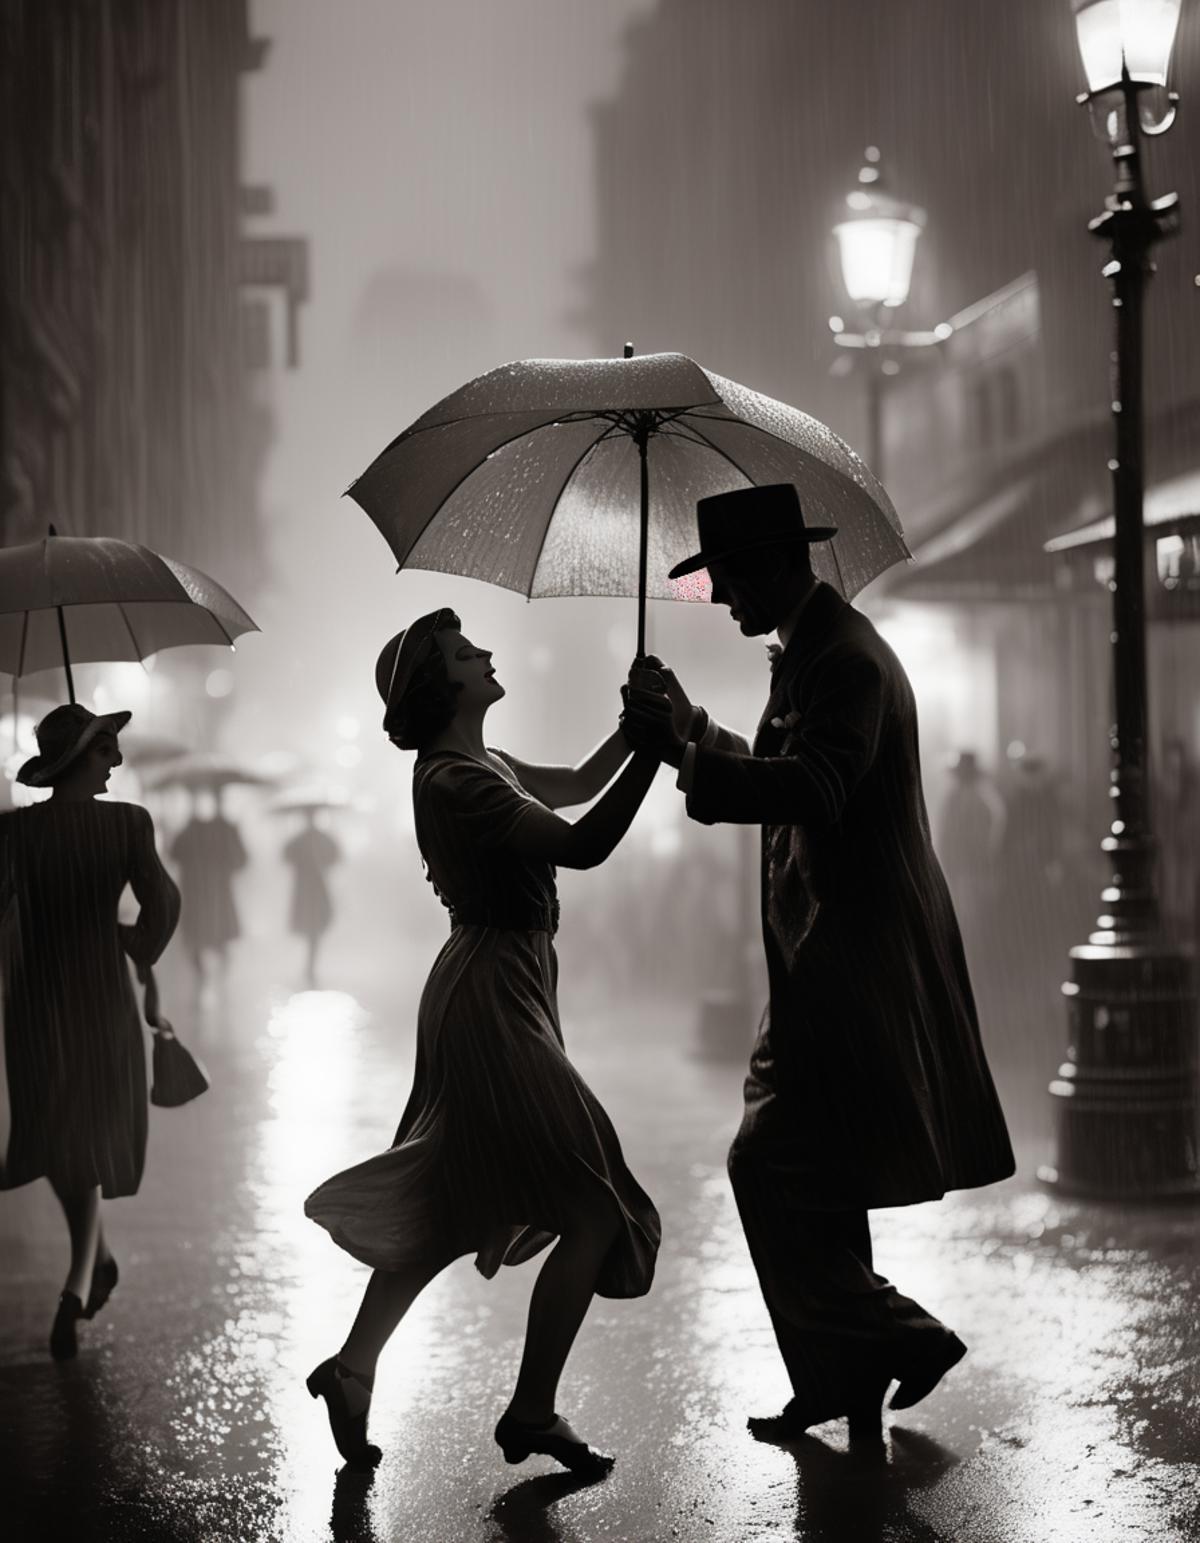 Man and woman dancing in the rain under umbrellas